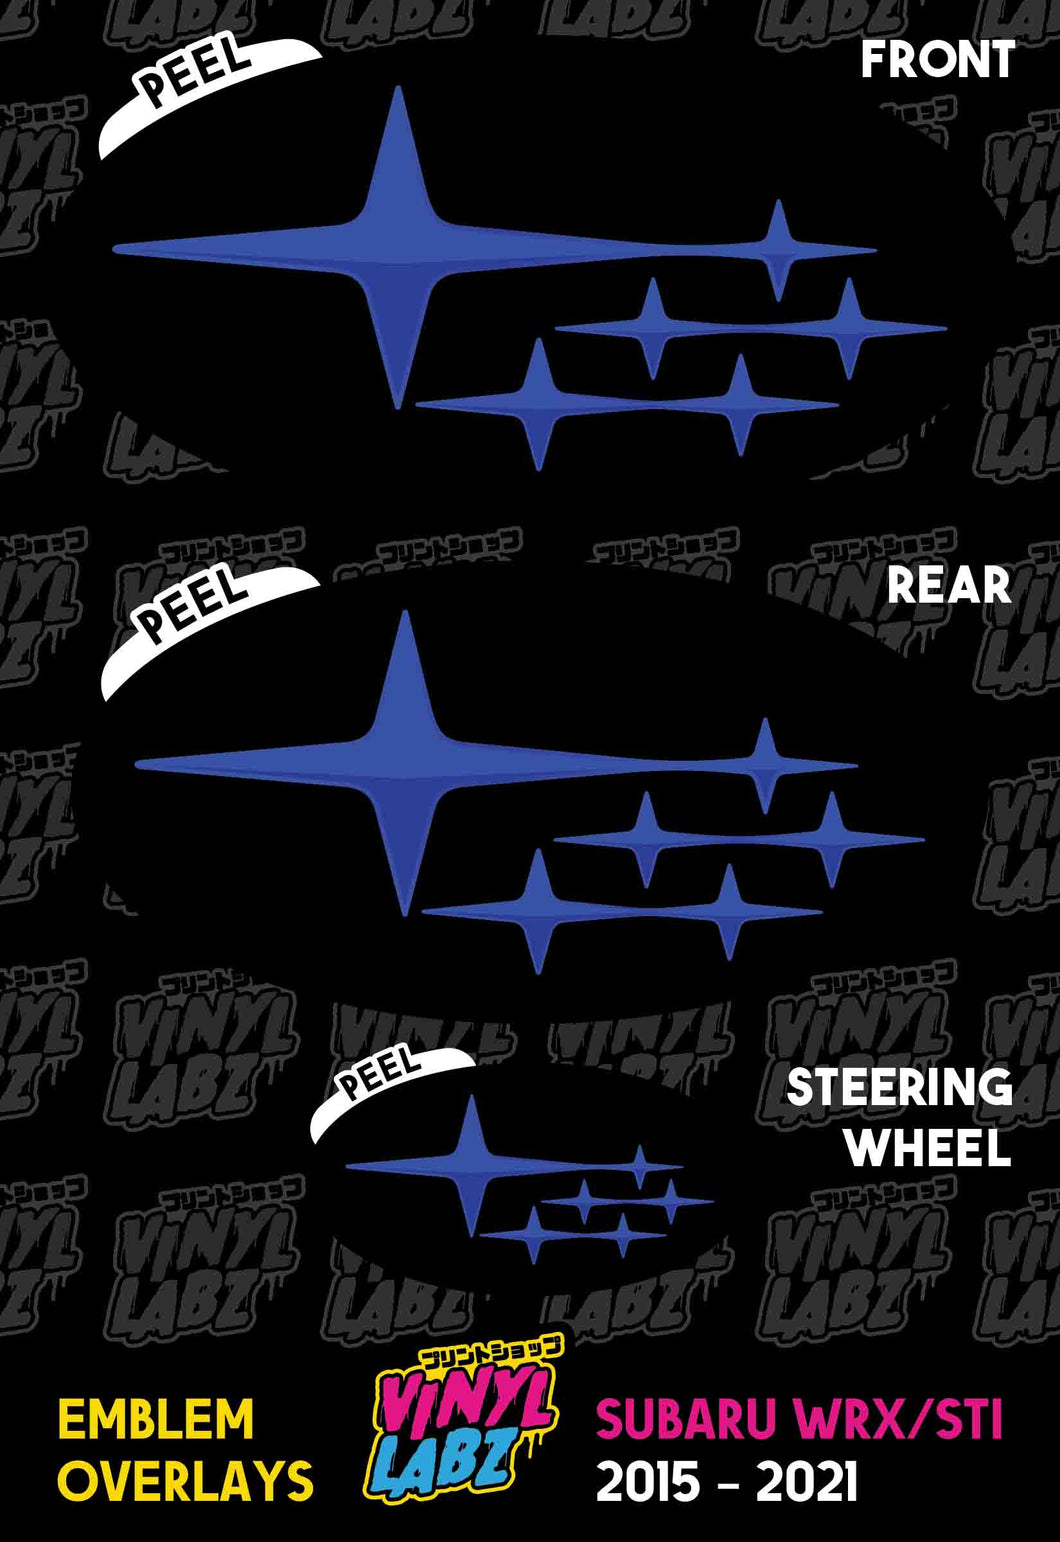 Subaru Vinyl Emblem Overlay ( Black and Blue) | 2015-2021 Subaru WRX/STI